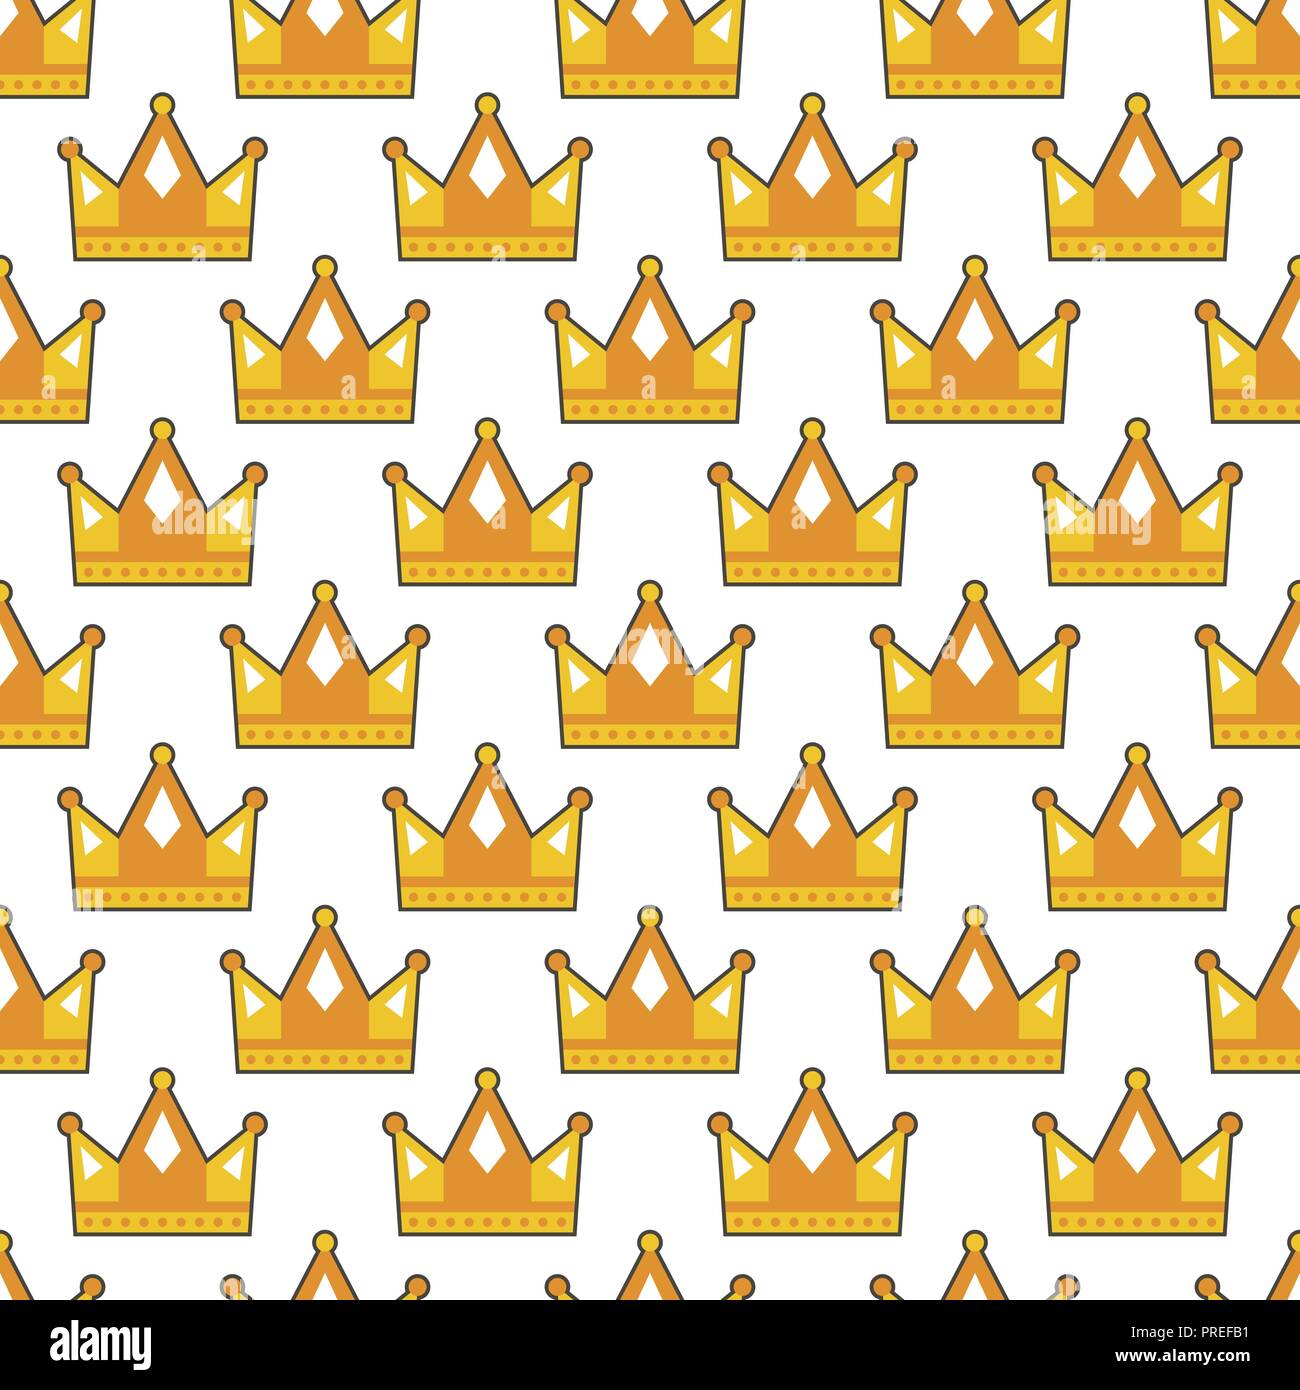 Crown Princess Goddess Queen Vector Background Material  Crown background  Queen wallpaper crown Queens wallpaper